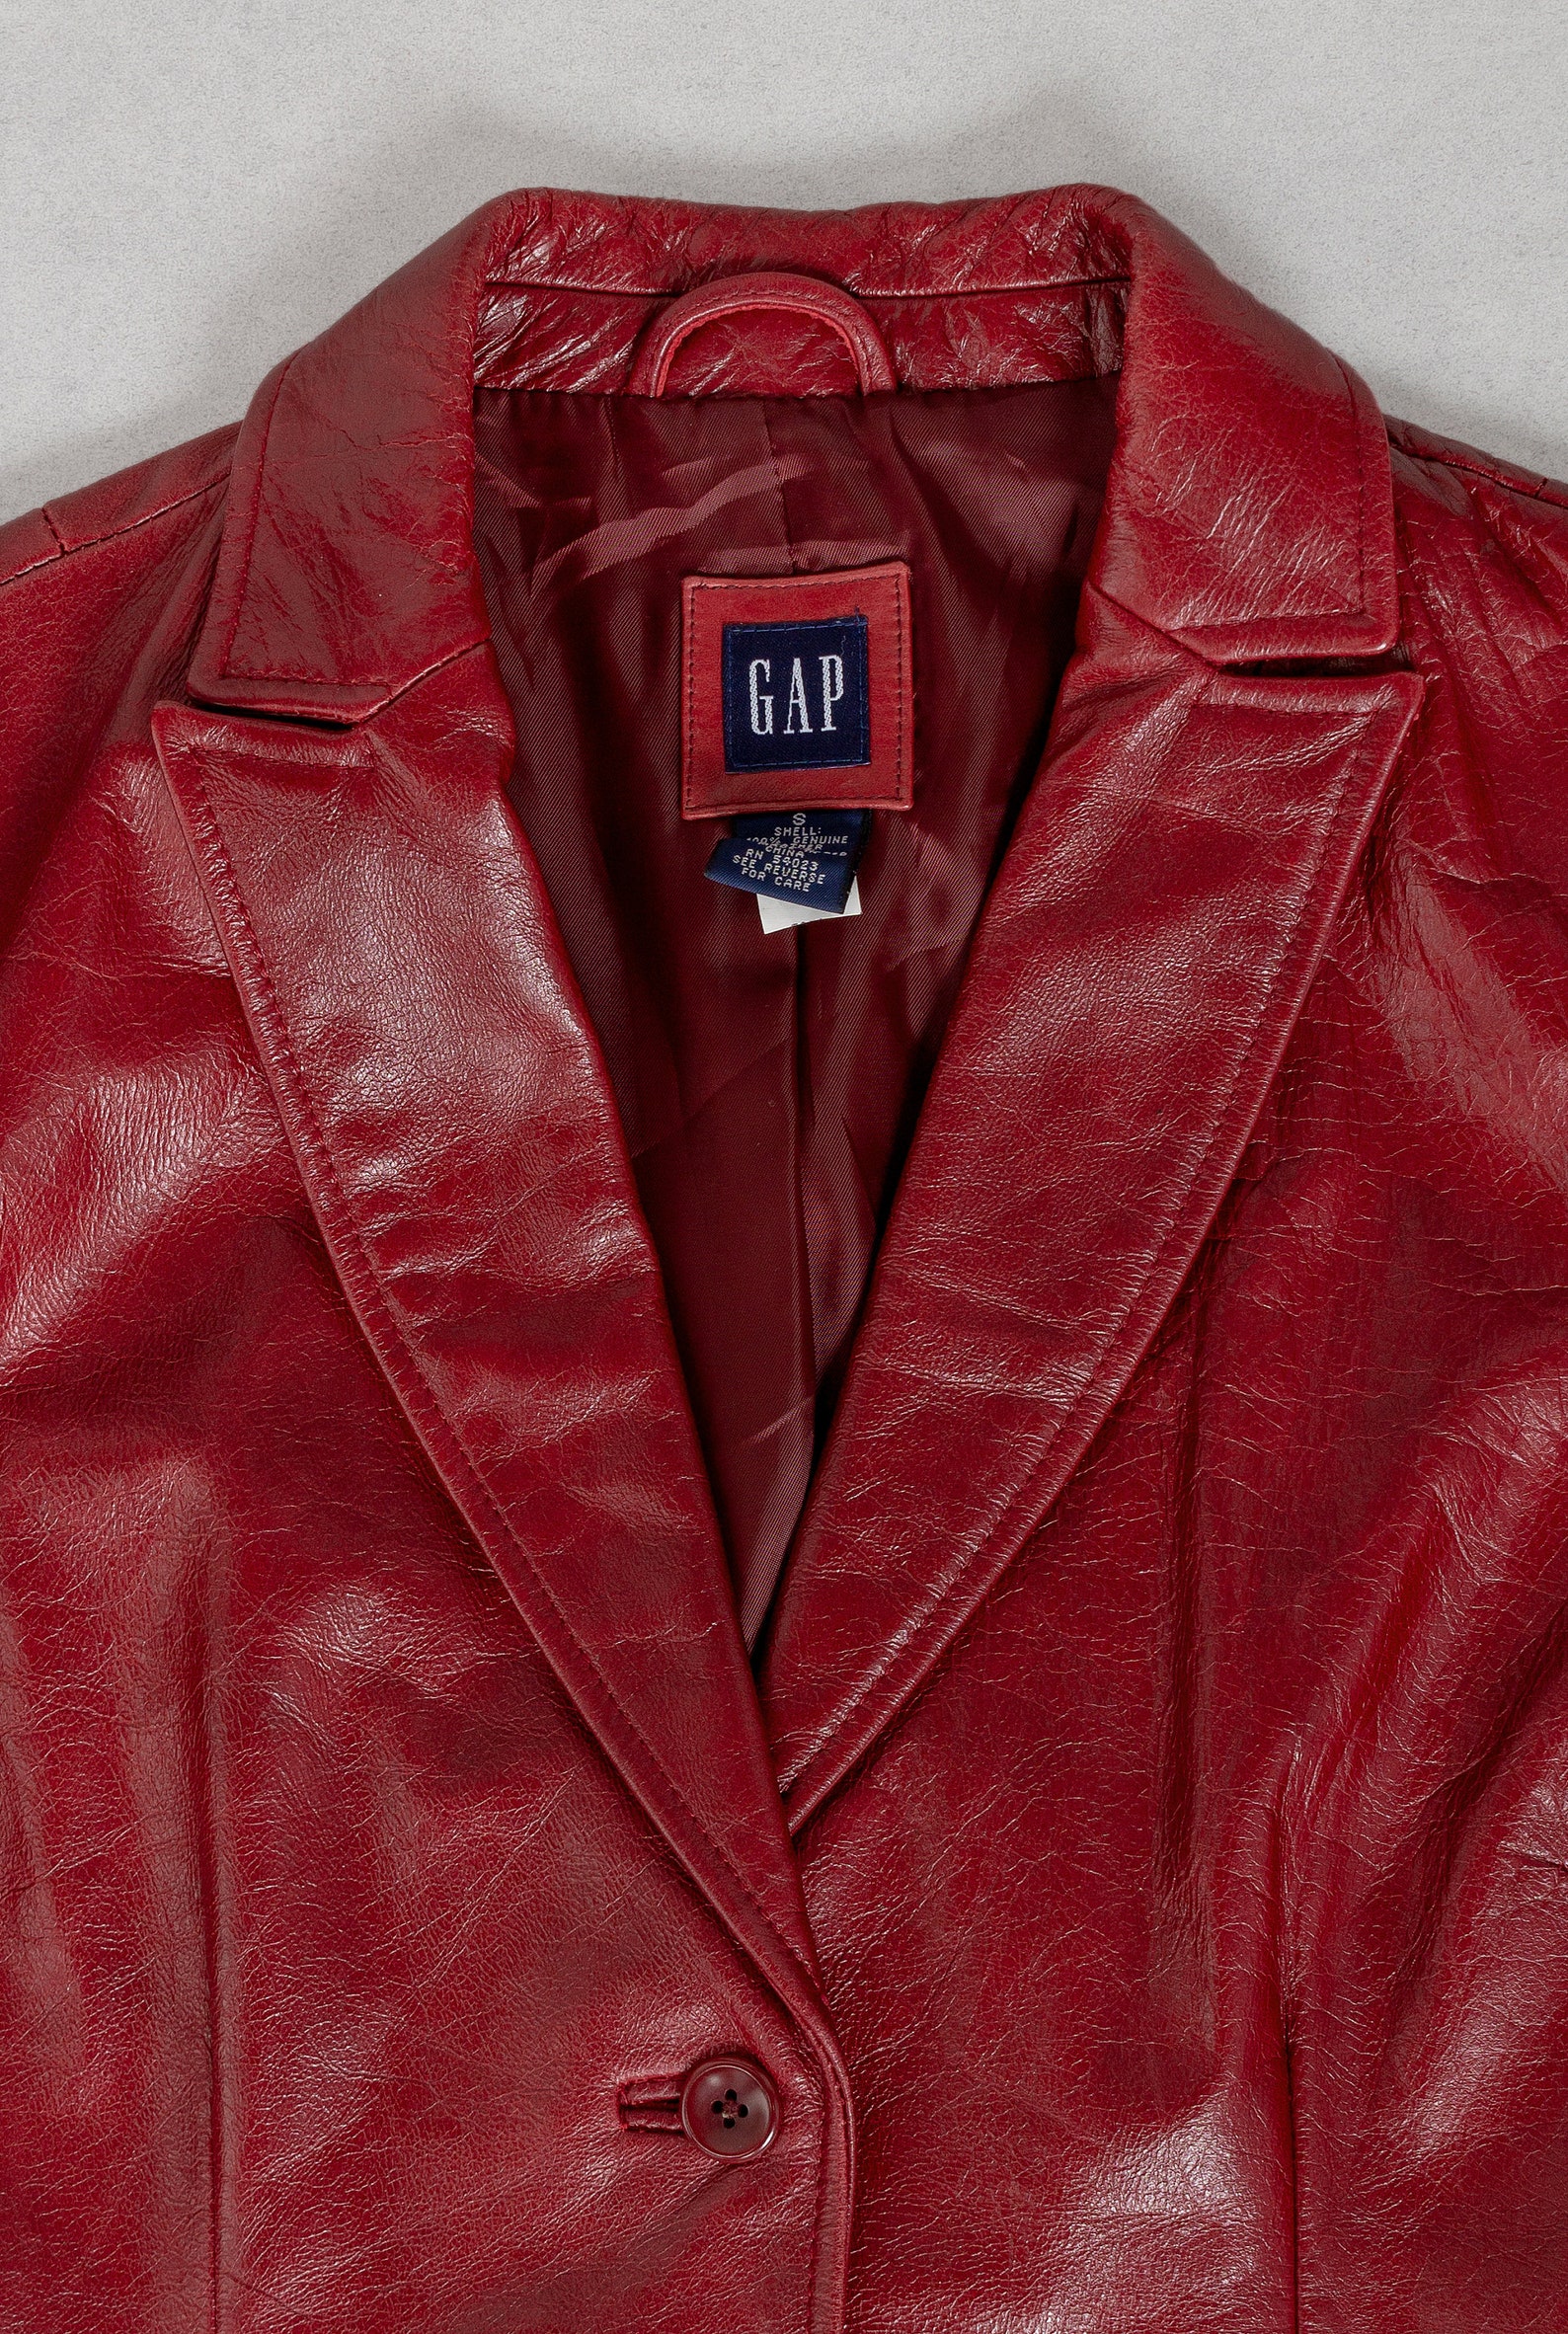 RED LEATHER BLAZER Vintage Gap Light Jacket Coat Woman | Etsy